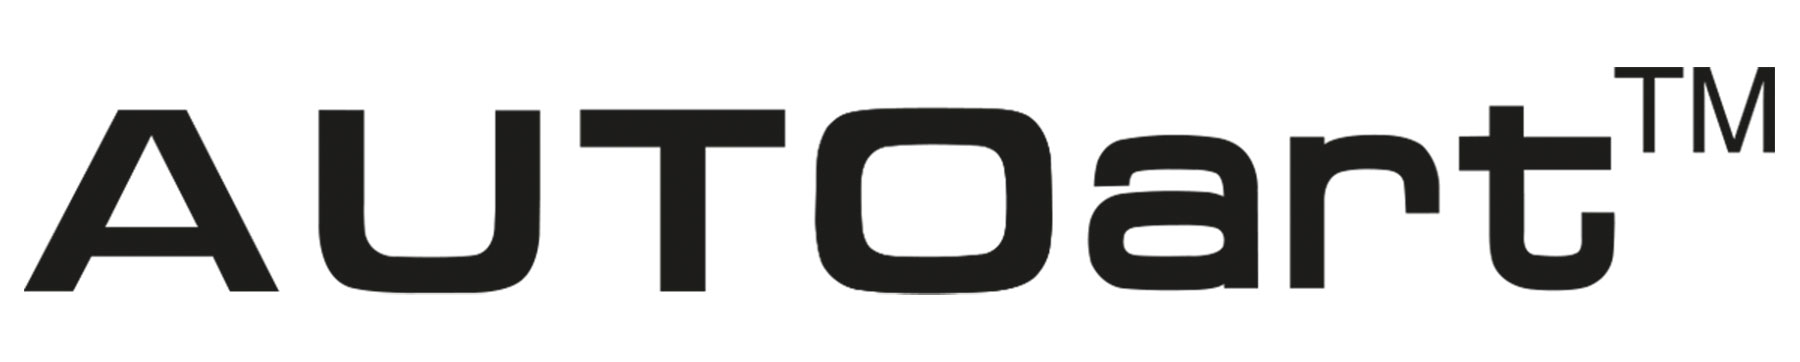 AUTOart logo